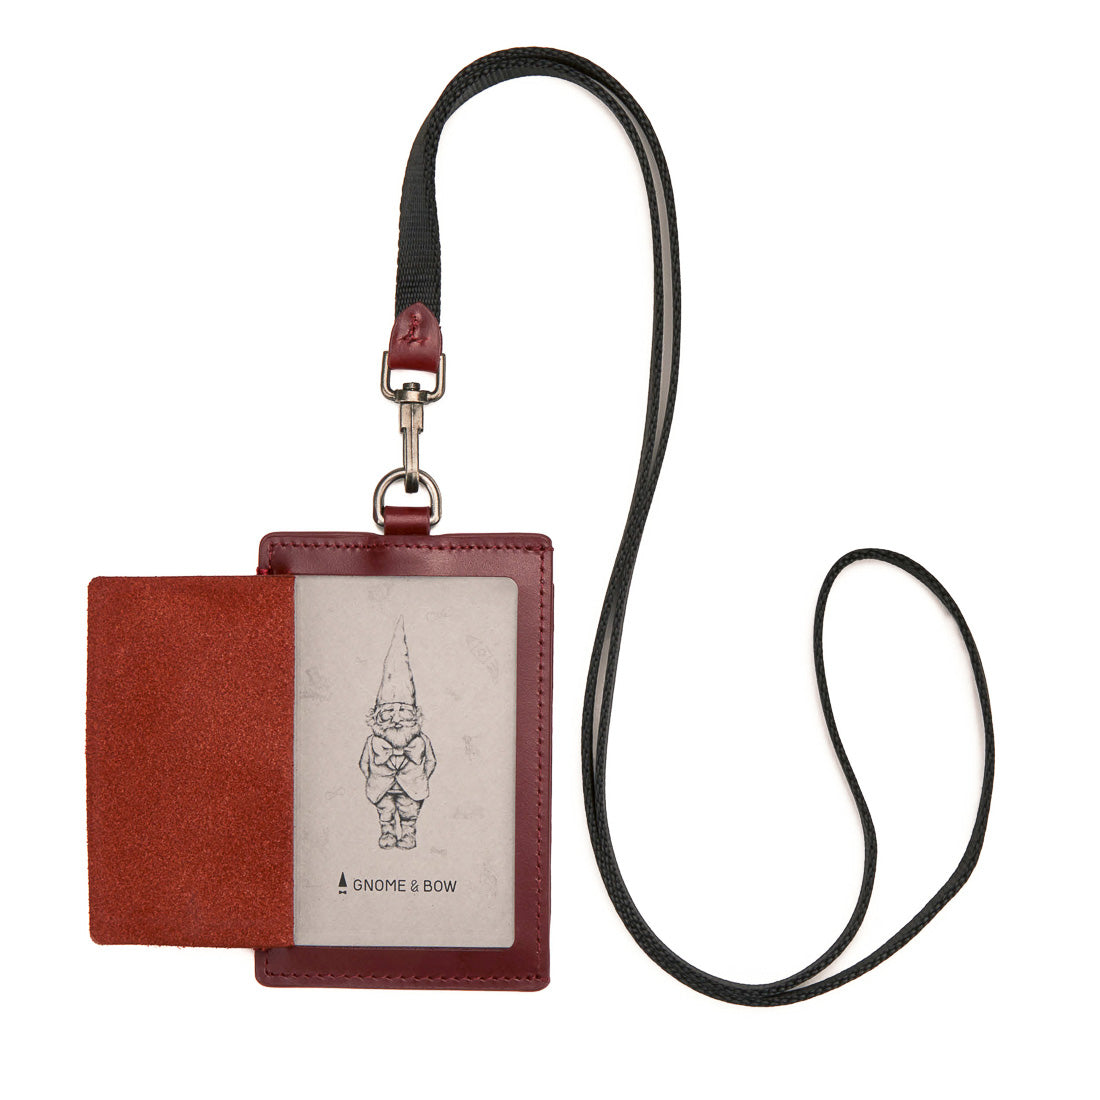 Book ID Card Holder Lanyard (USA Wax Leather)